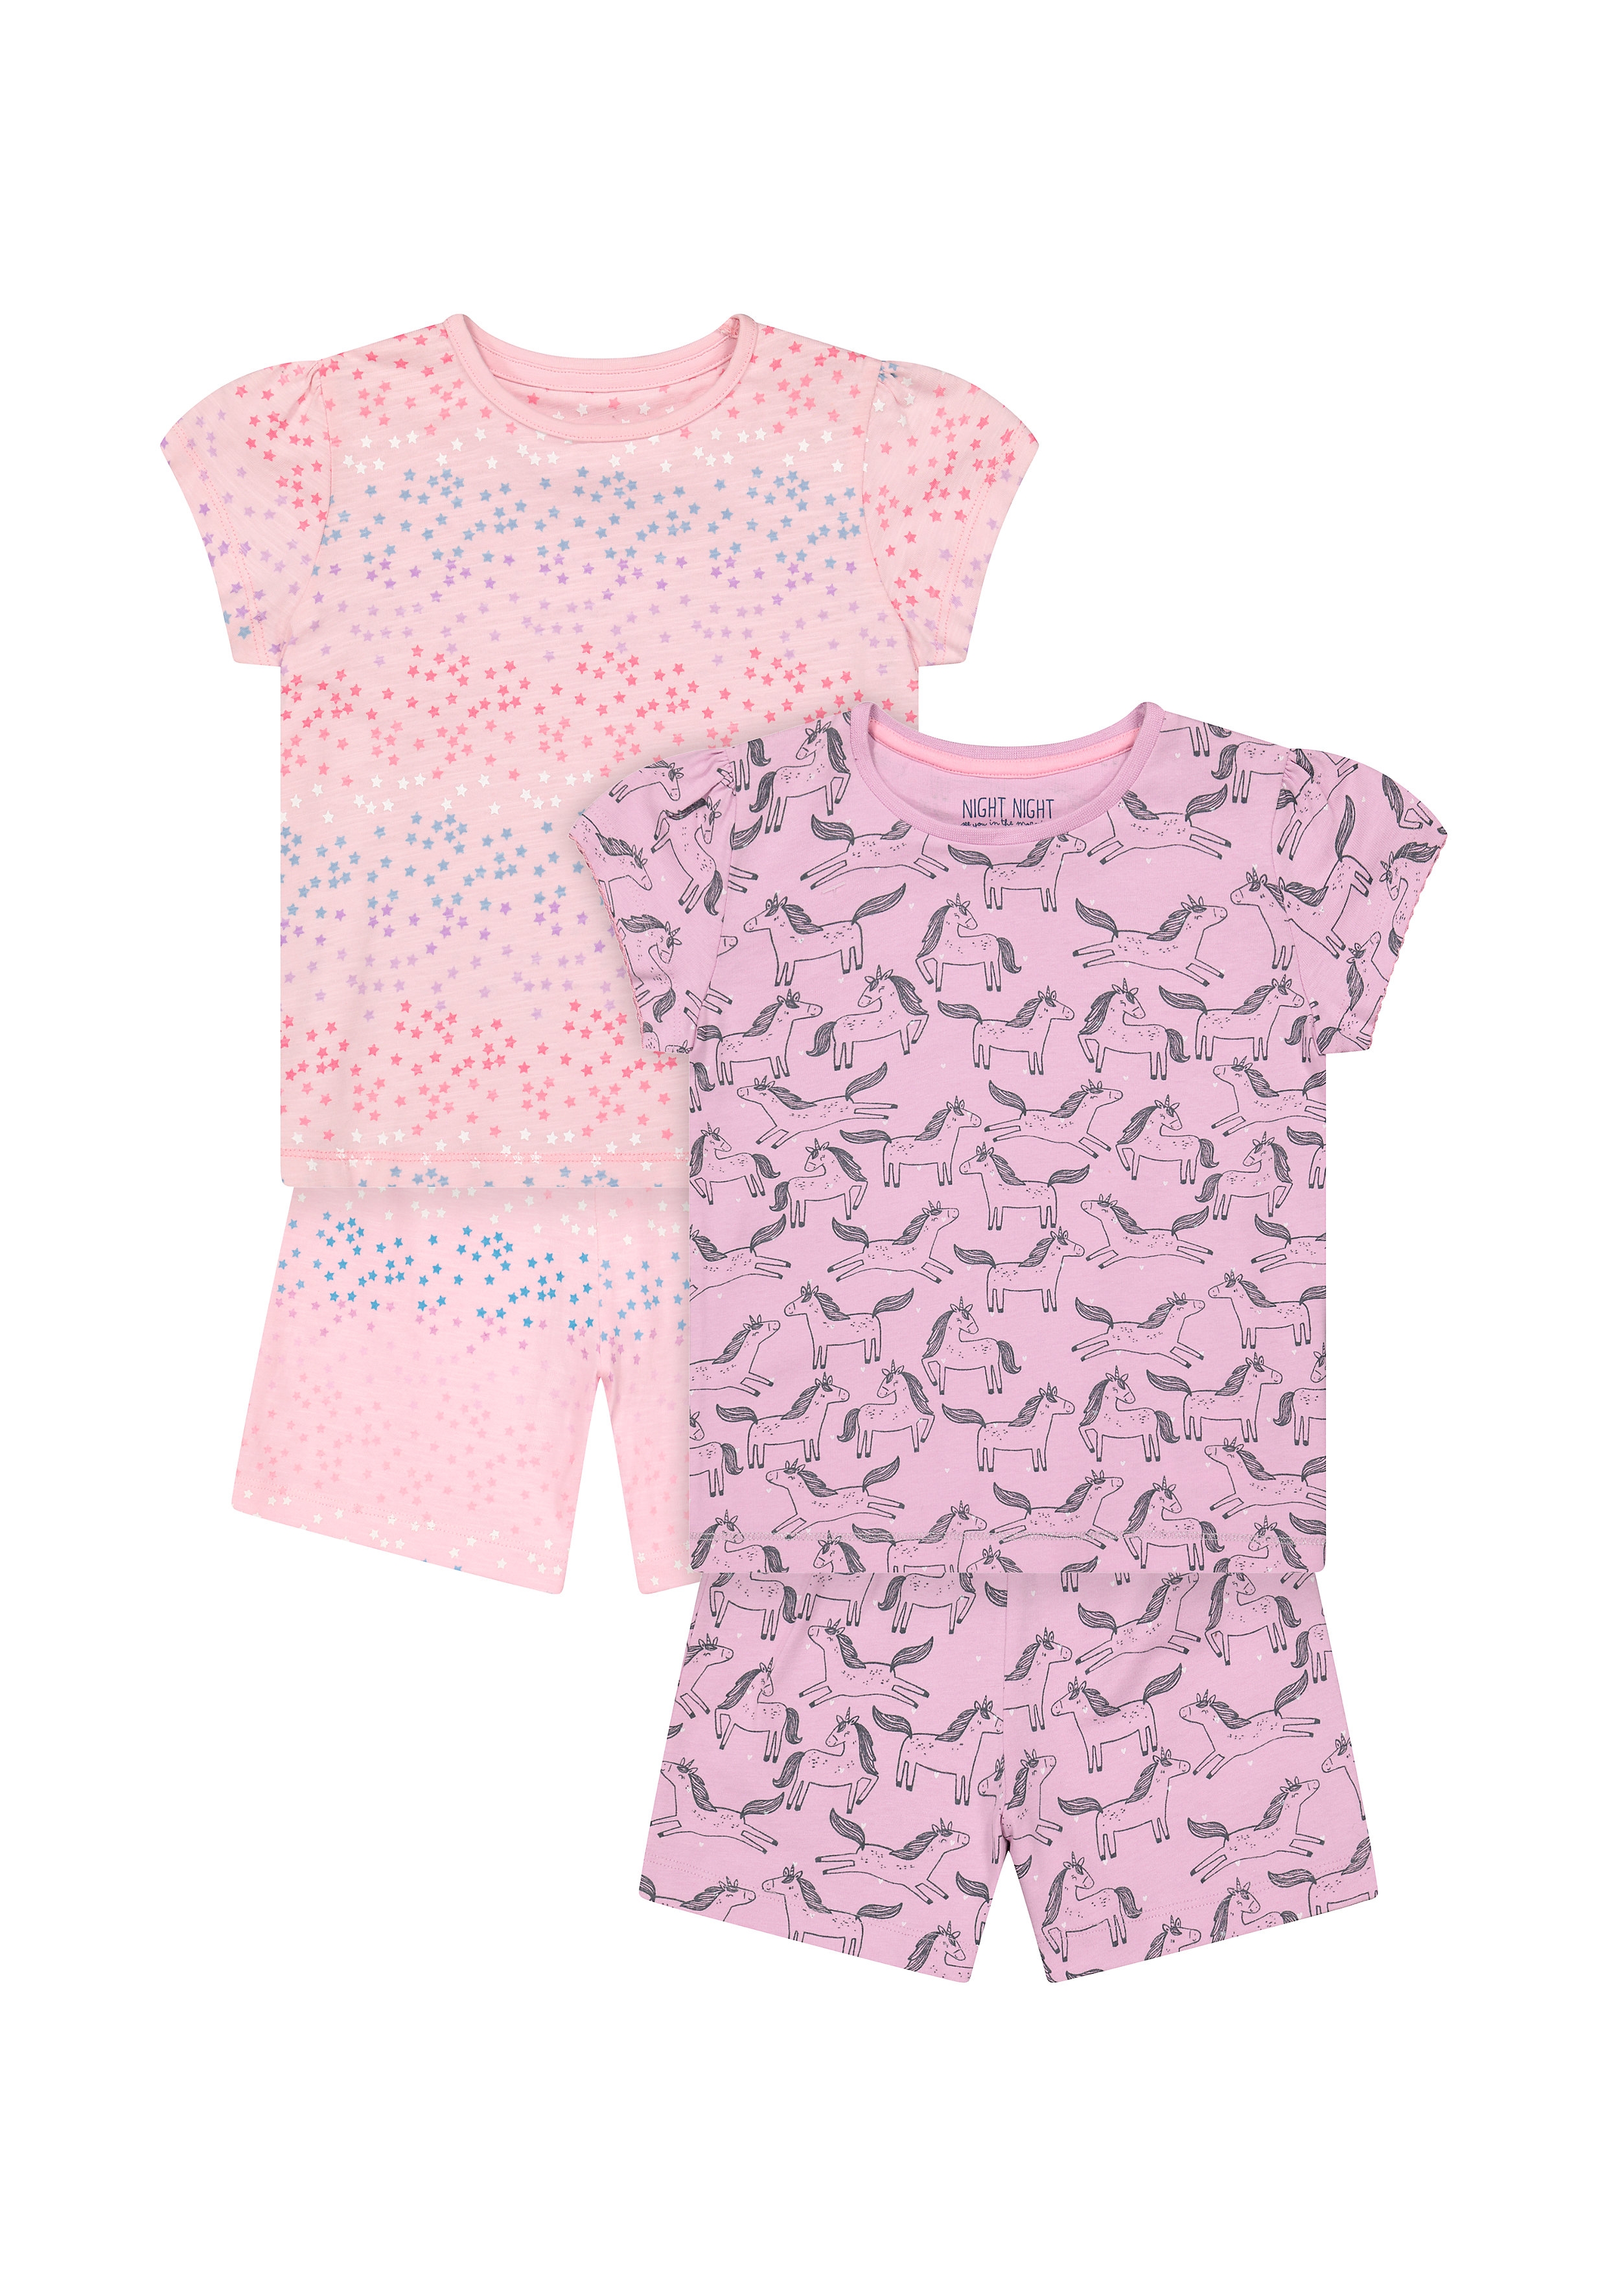 Girls Half Sleeves Shorts Sets - Pack Of 2 - Pink